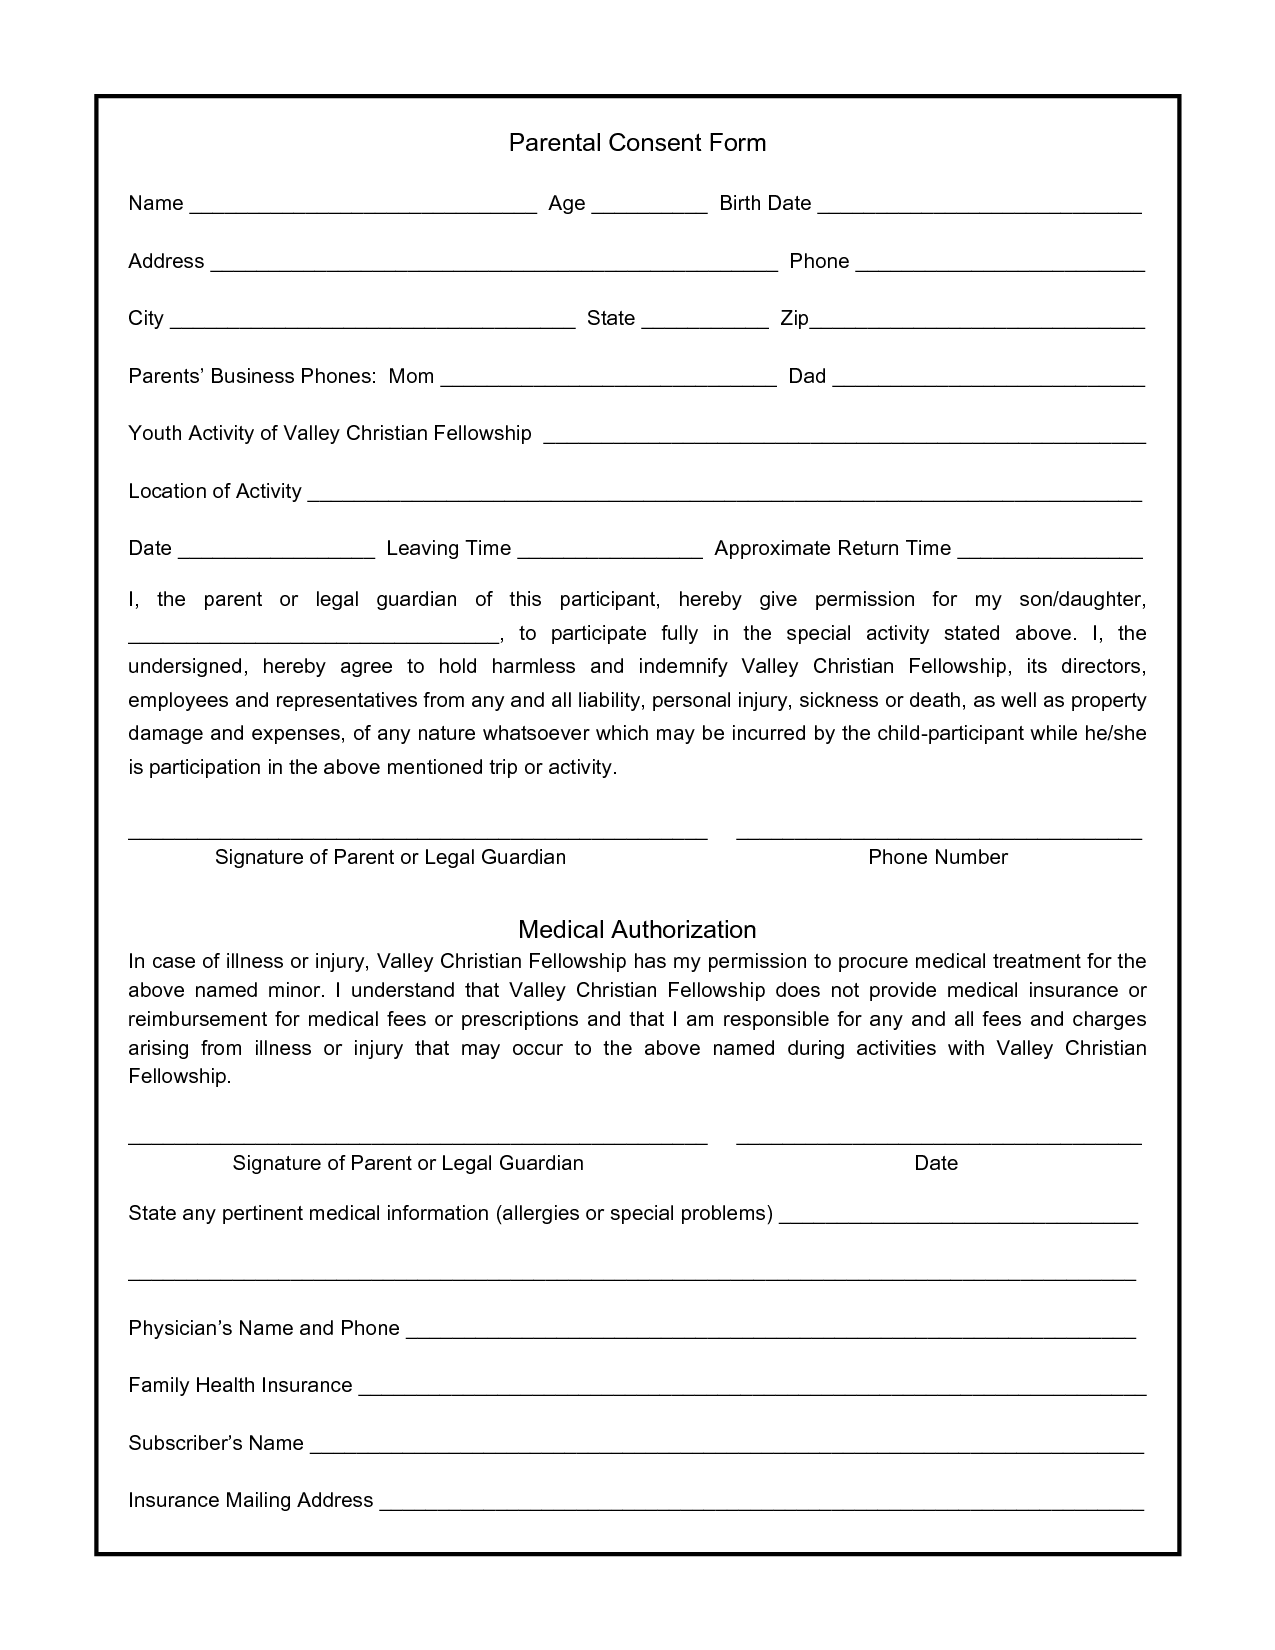 parental-consent-form-free-printable-documents